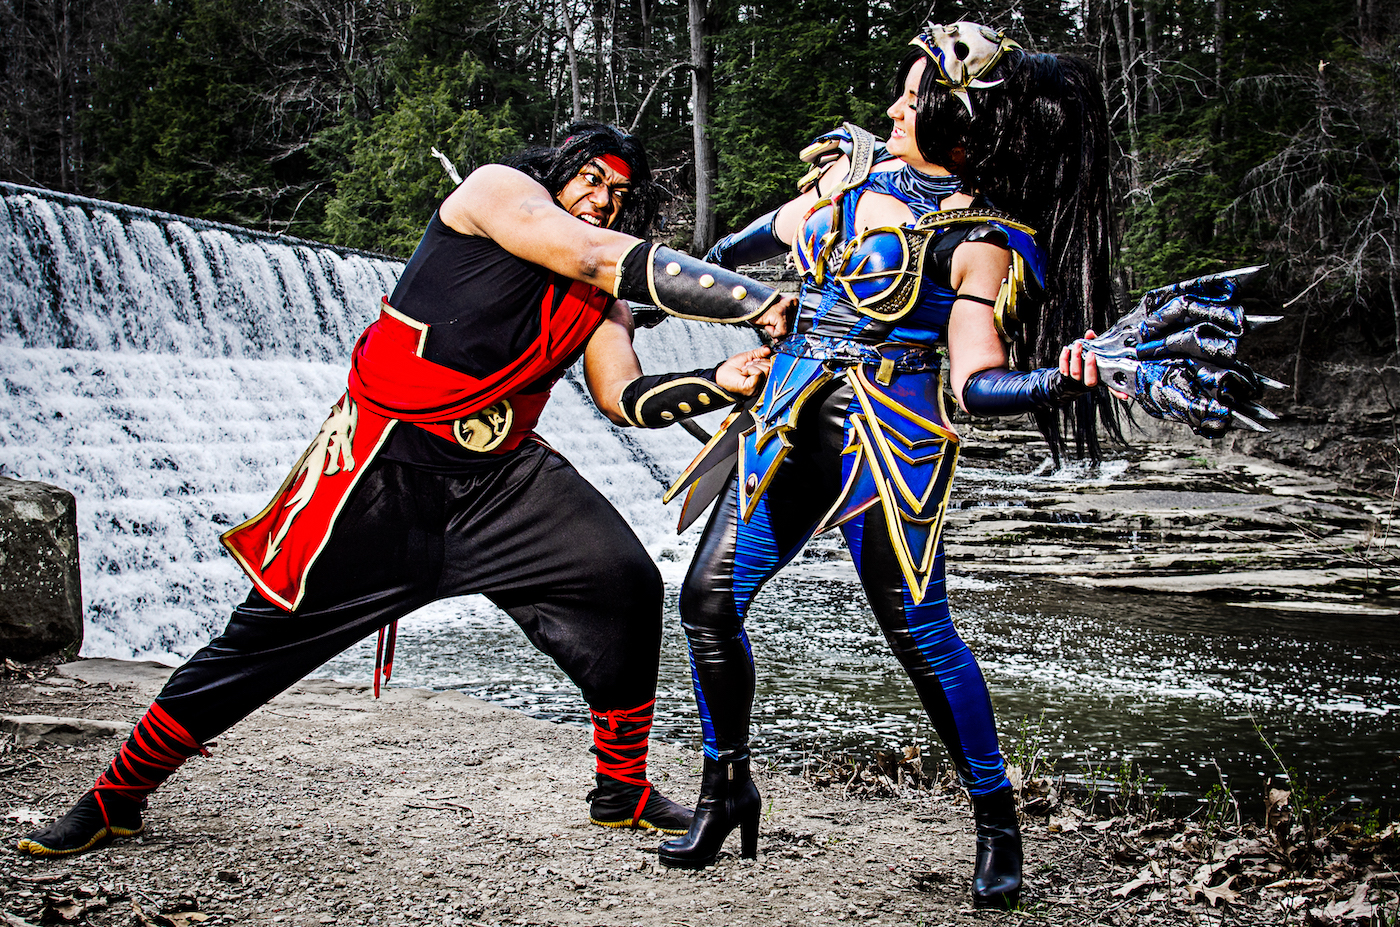 Knightmage - Shao Kahn - Mortal Kombat Photo by Blazek